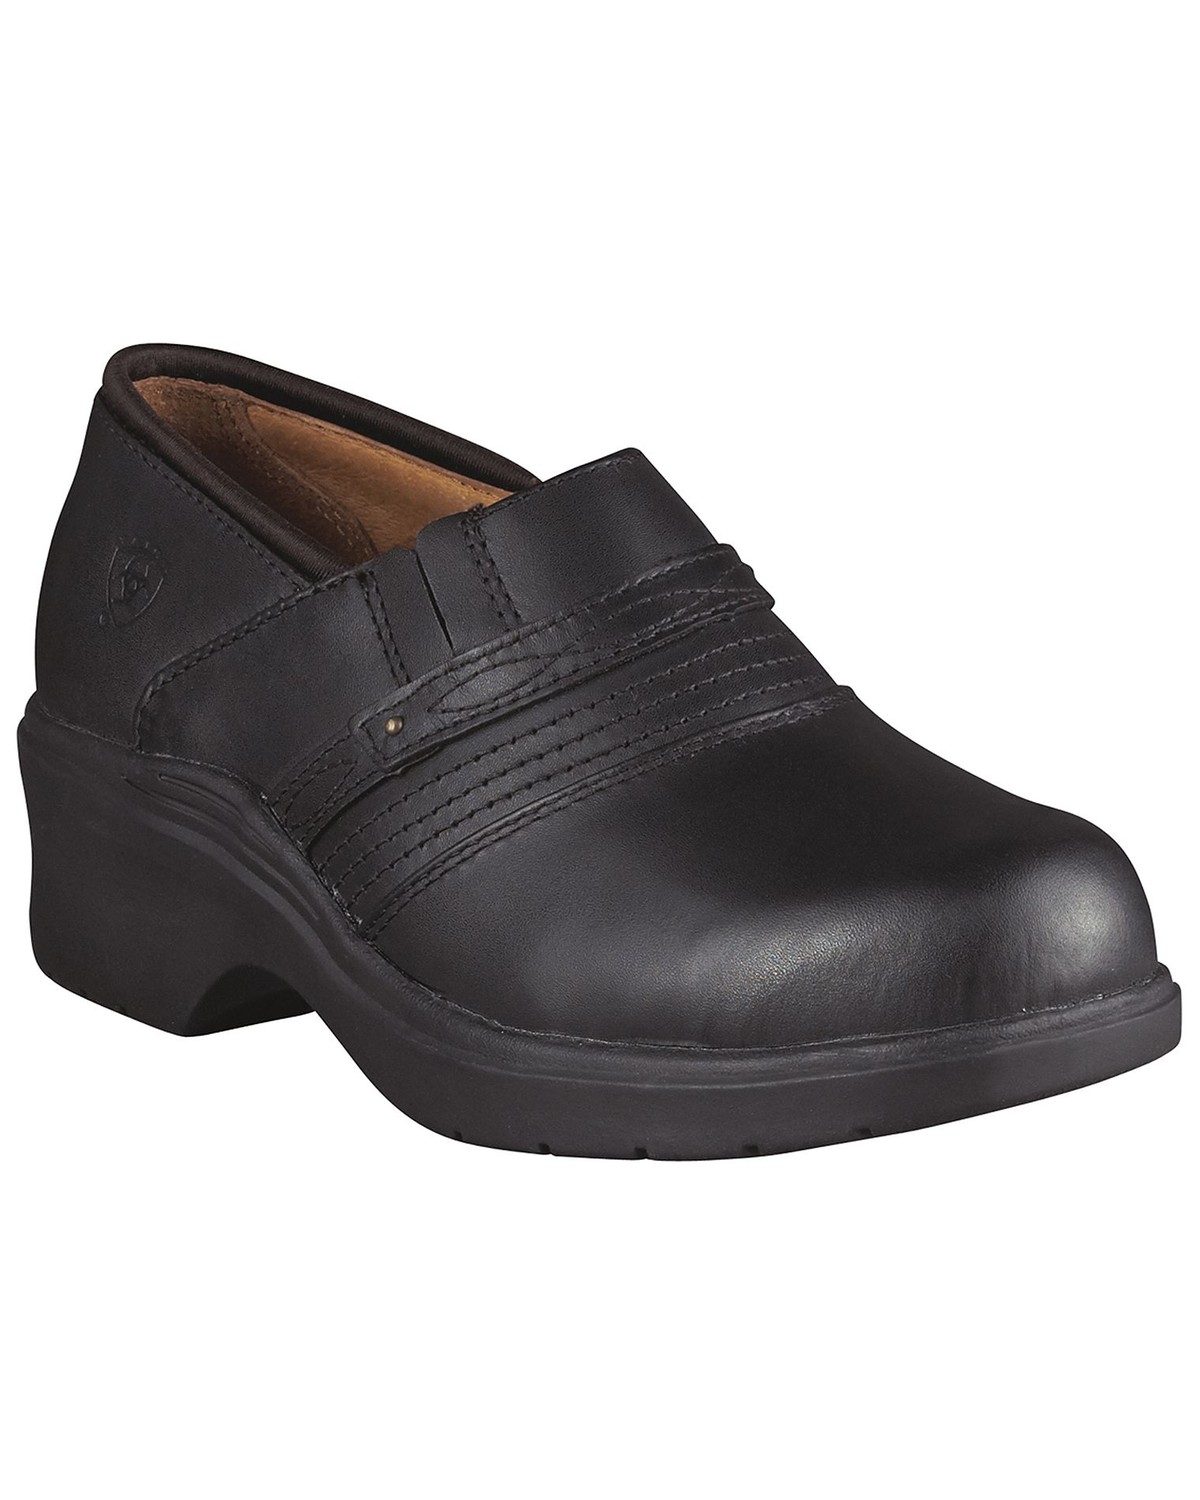 Ariat Women's Black Safety Clog Steel Toe Leather Footwear 